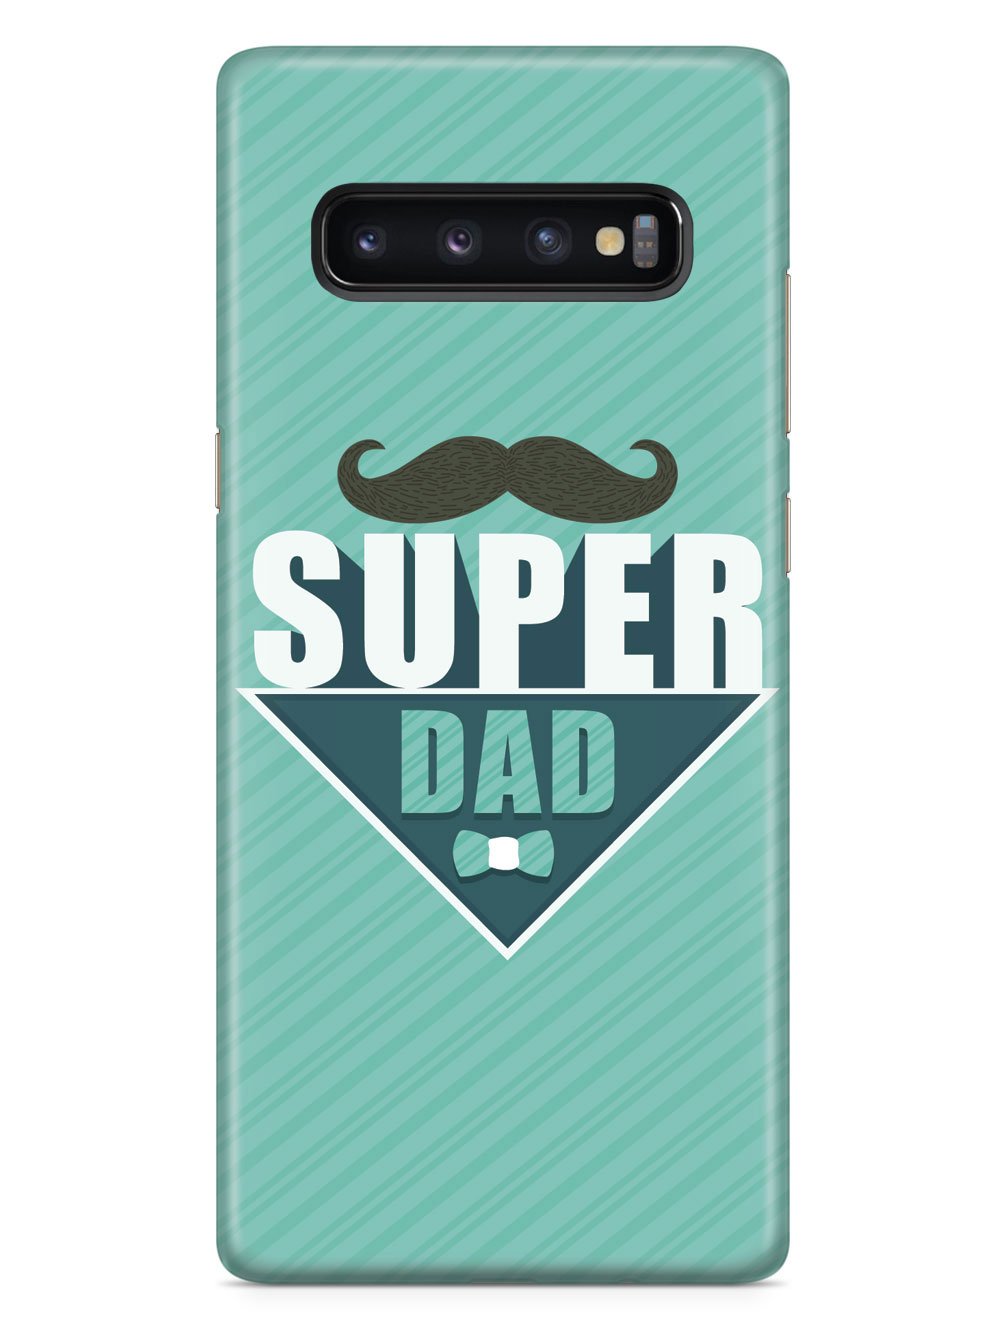 Super Dad - Black Case